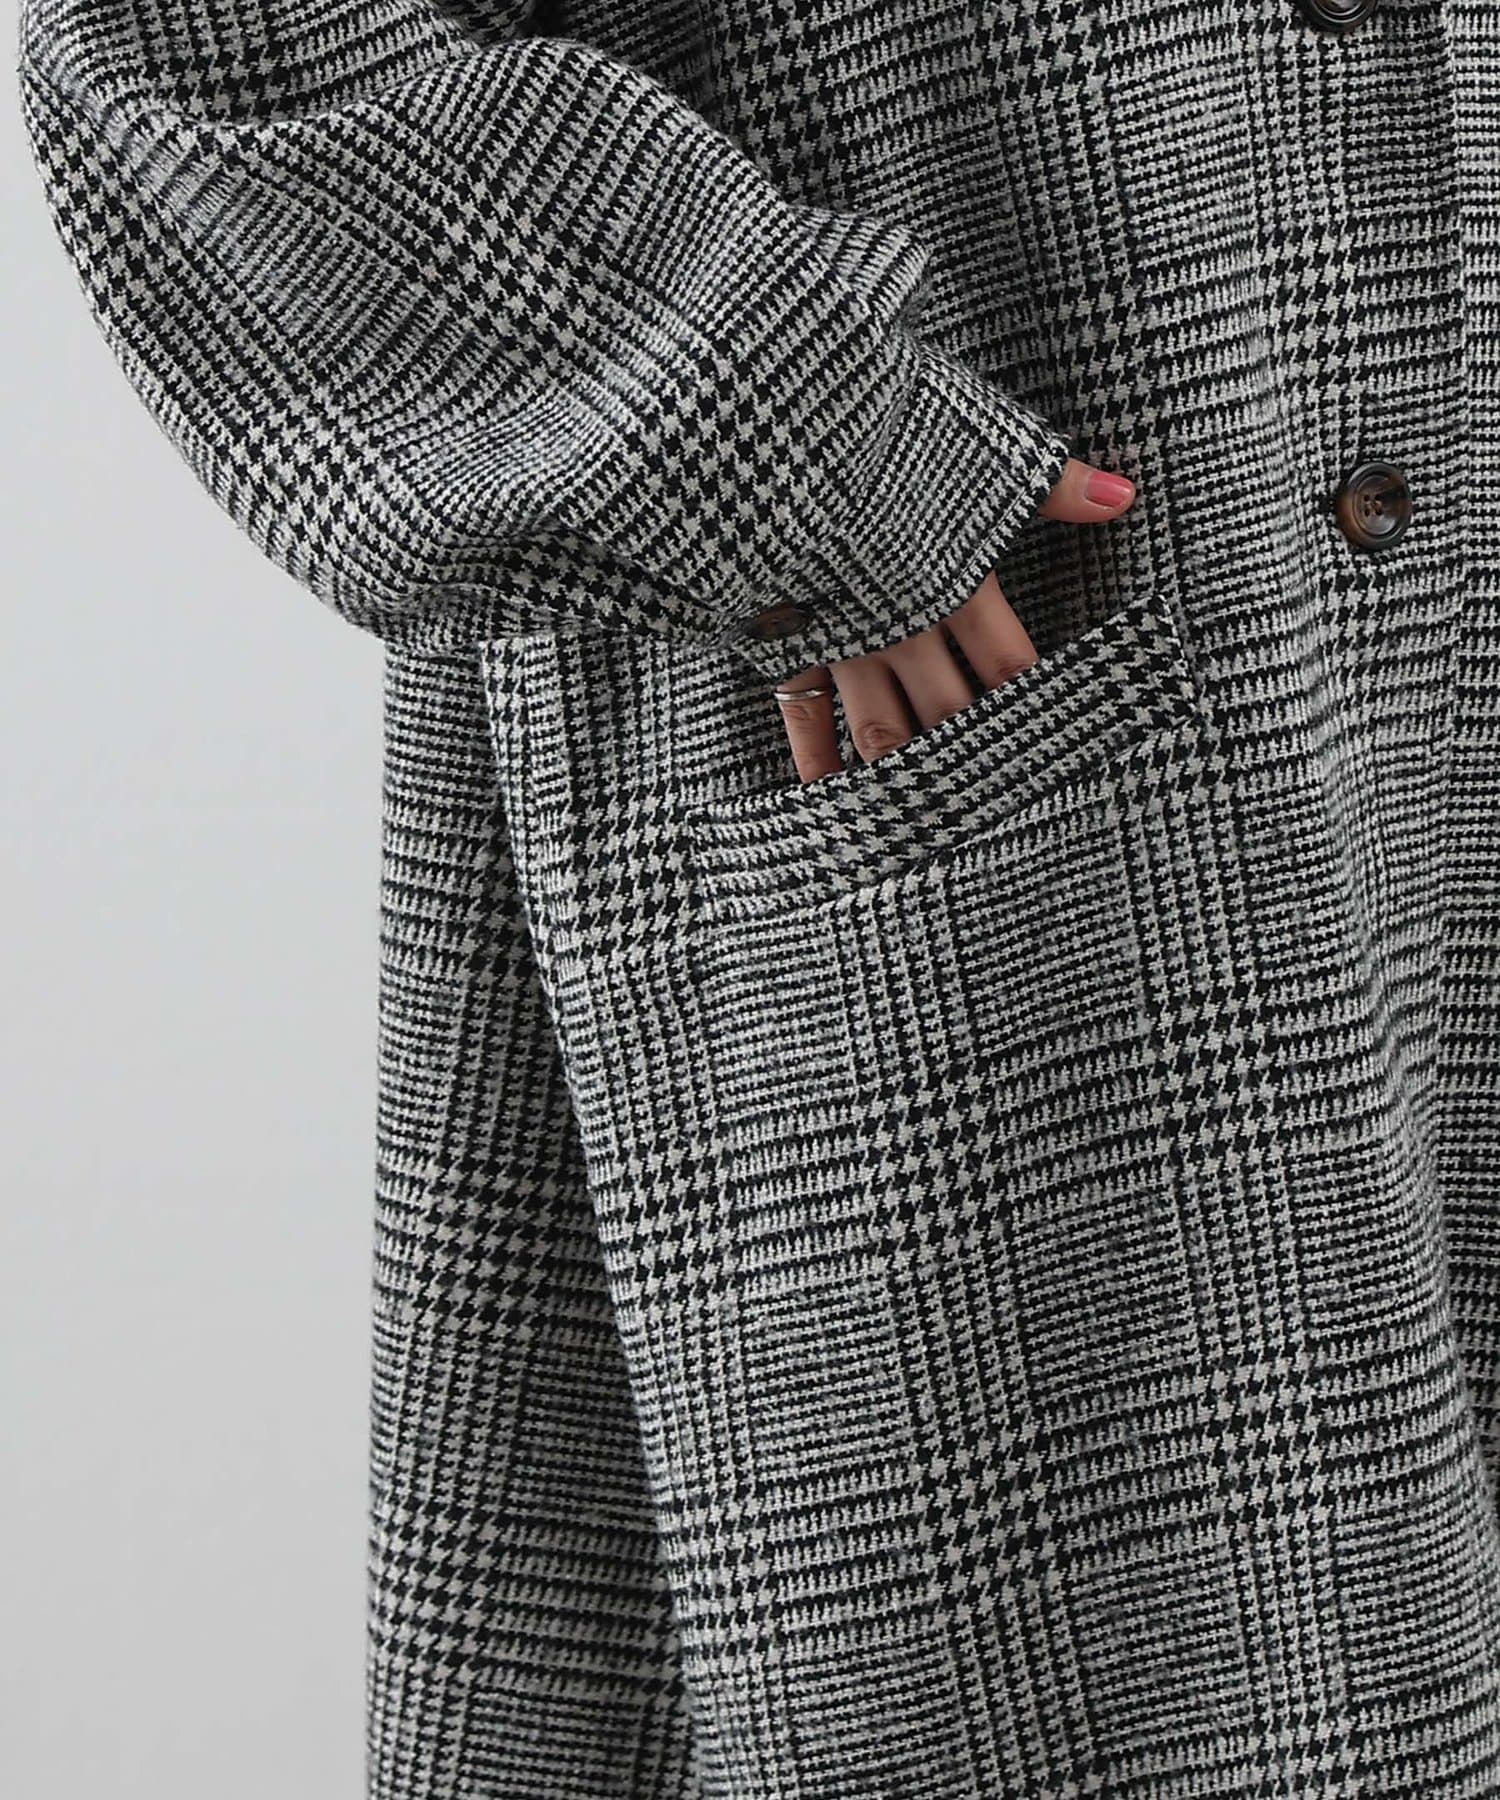 COLONY 2139(コロニー トゥーワンスリーナイン) ウール混チェック柄ボリューム袖コート